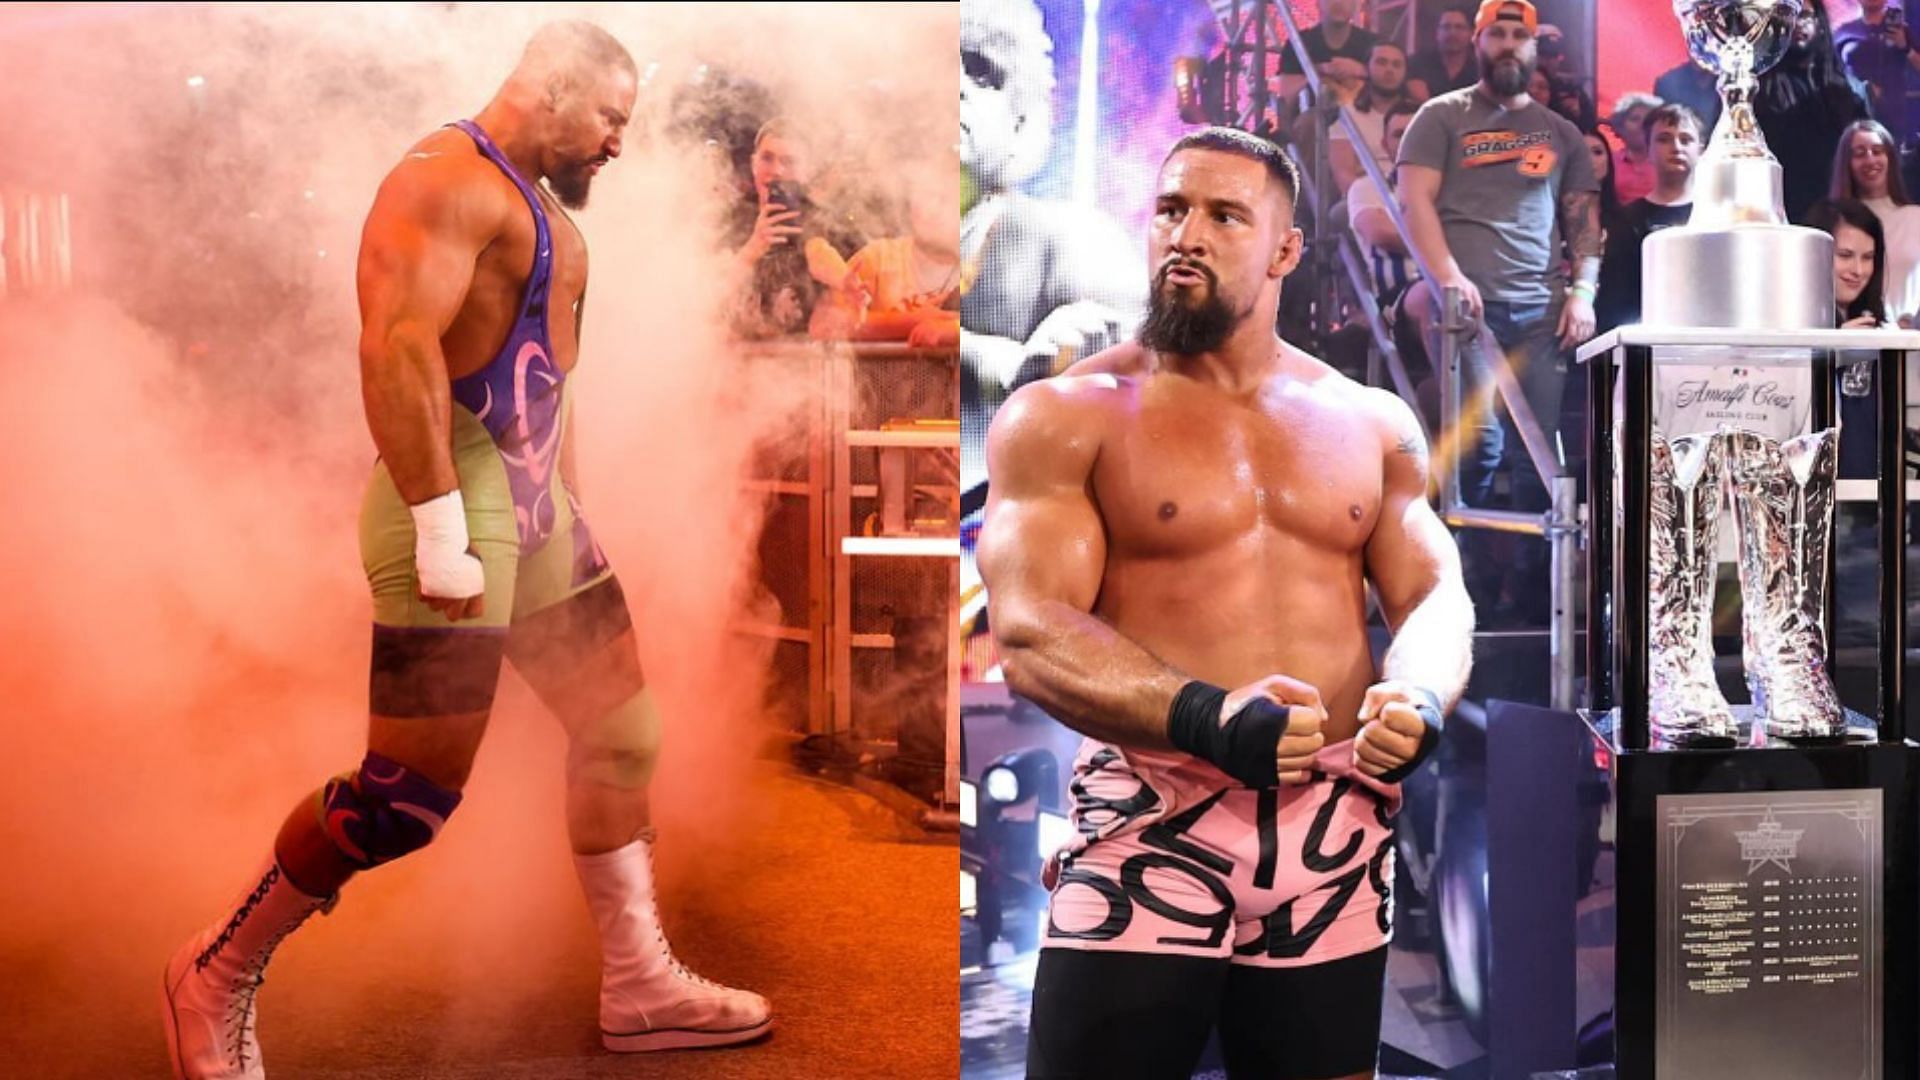 Bron Breakker is one of the strongest superstars in WWE